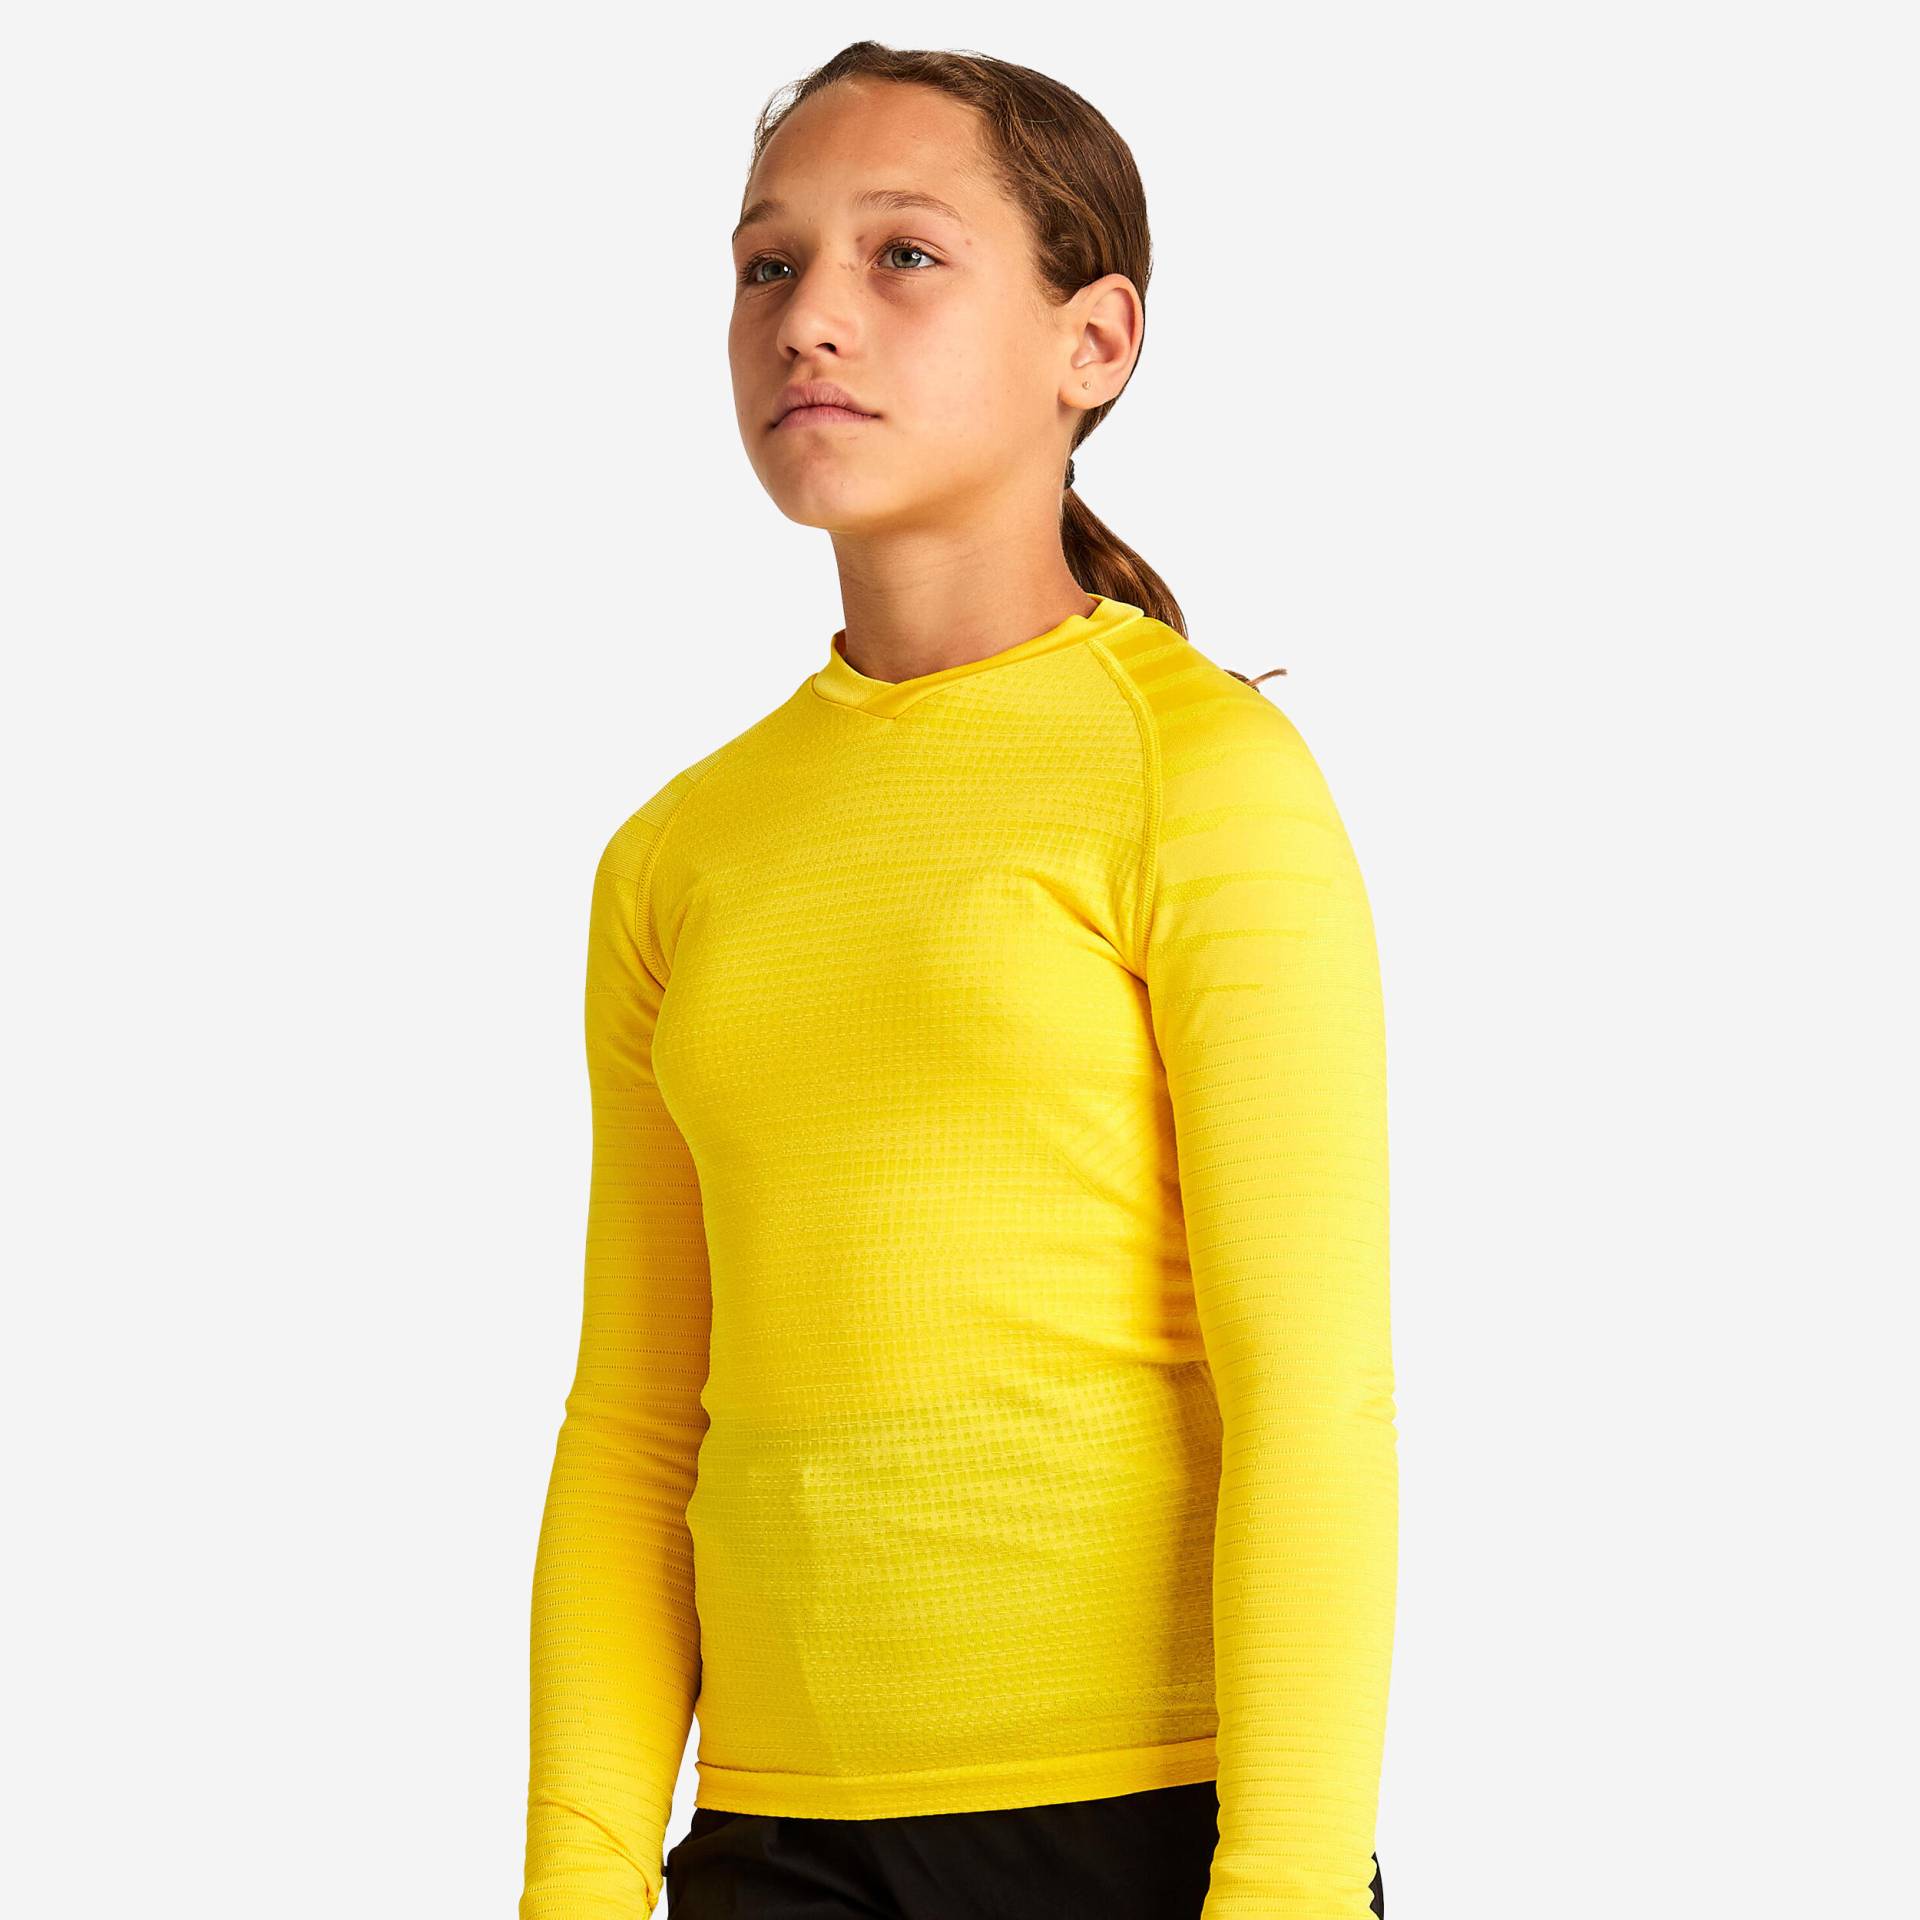 Kinder Fussball Funktionsshirt langarm - Keepdry 500 Wärmekomfort gelb von KIPSTA